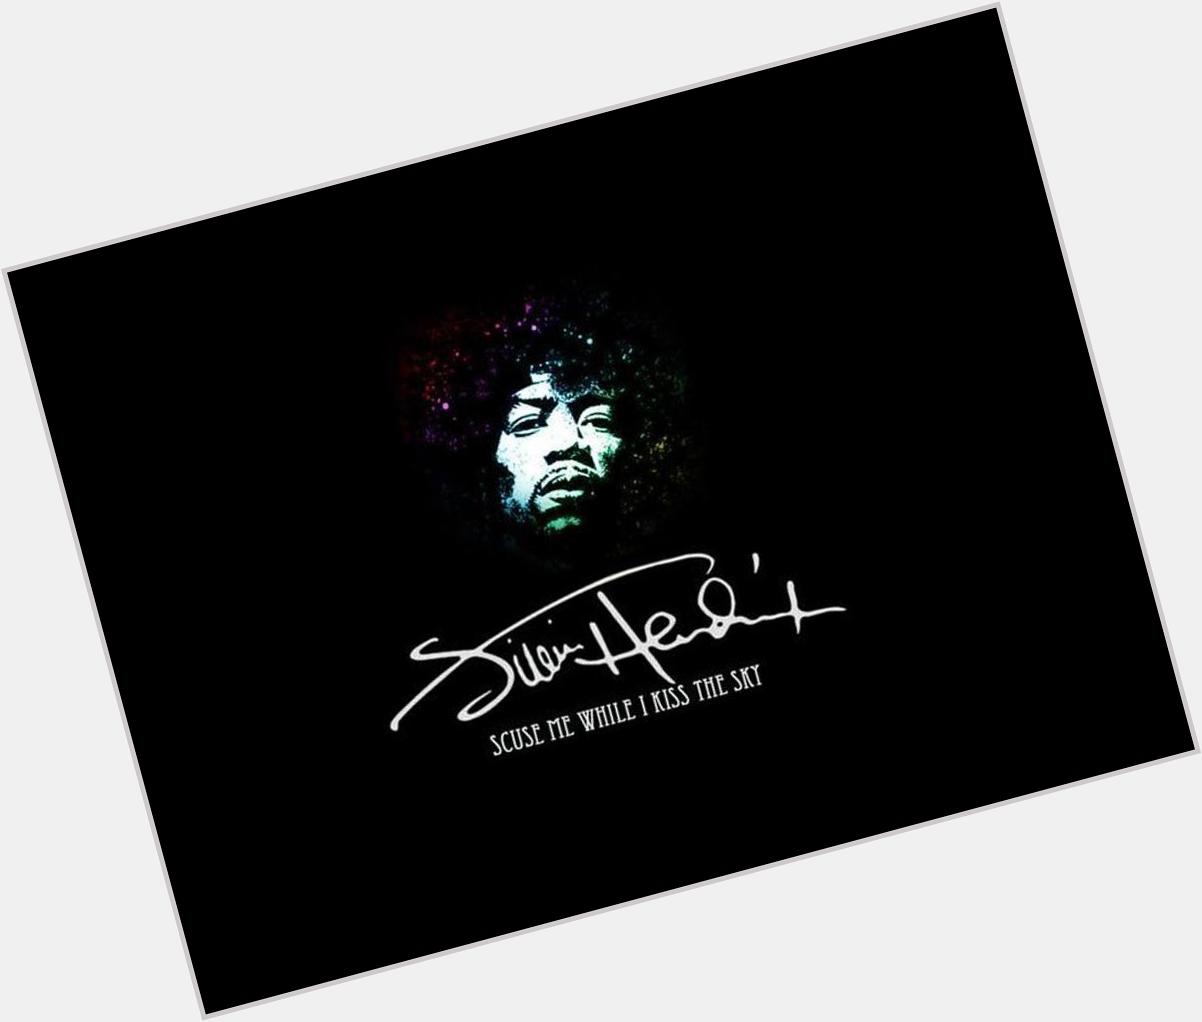 Happy birthday Jimi Hendrix. 